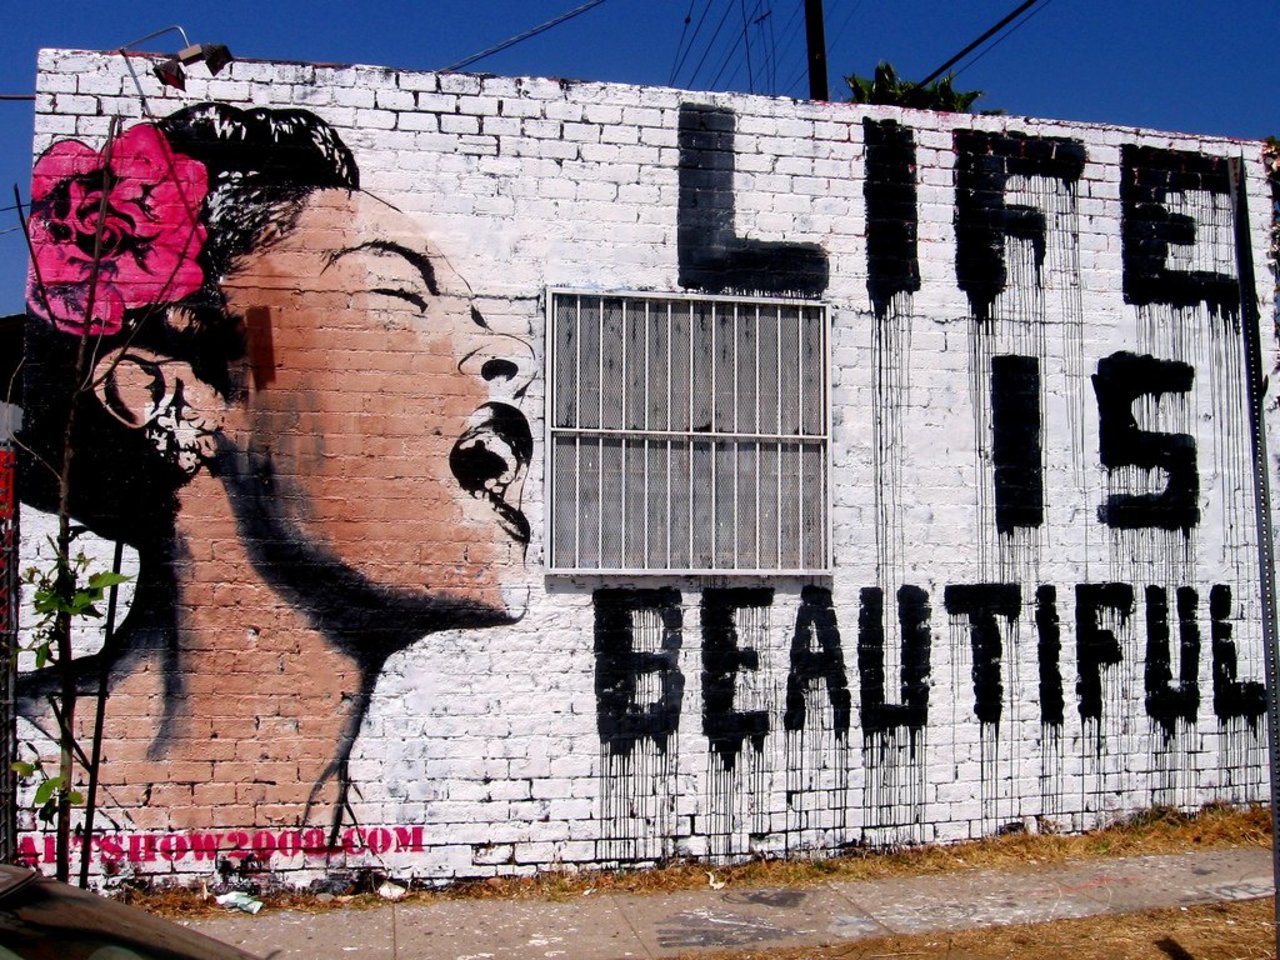 LIFE IS BEAUTIFUL#Streetart #urbanart #graffiti #mural by Banksy https://t.co/VZwQsEl5Mk